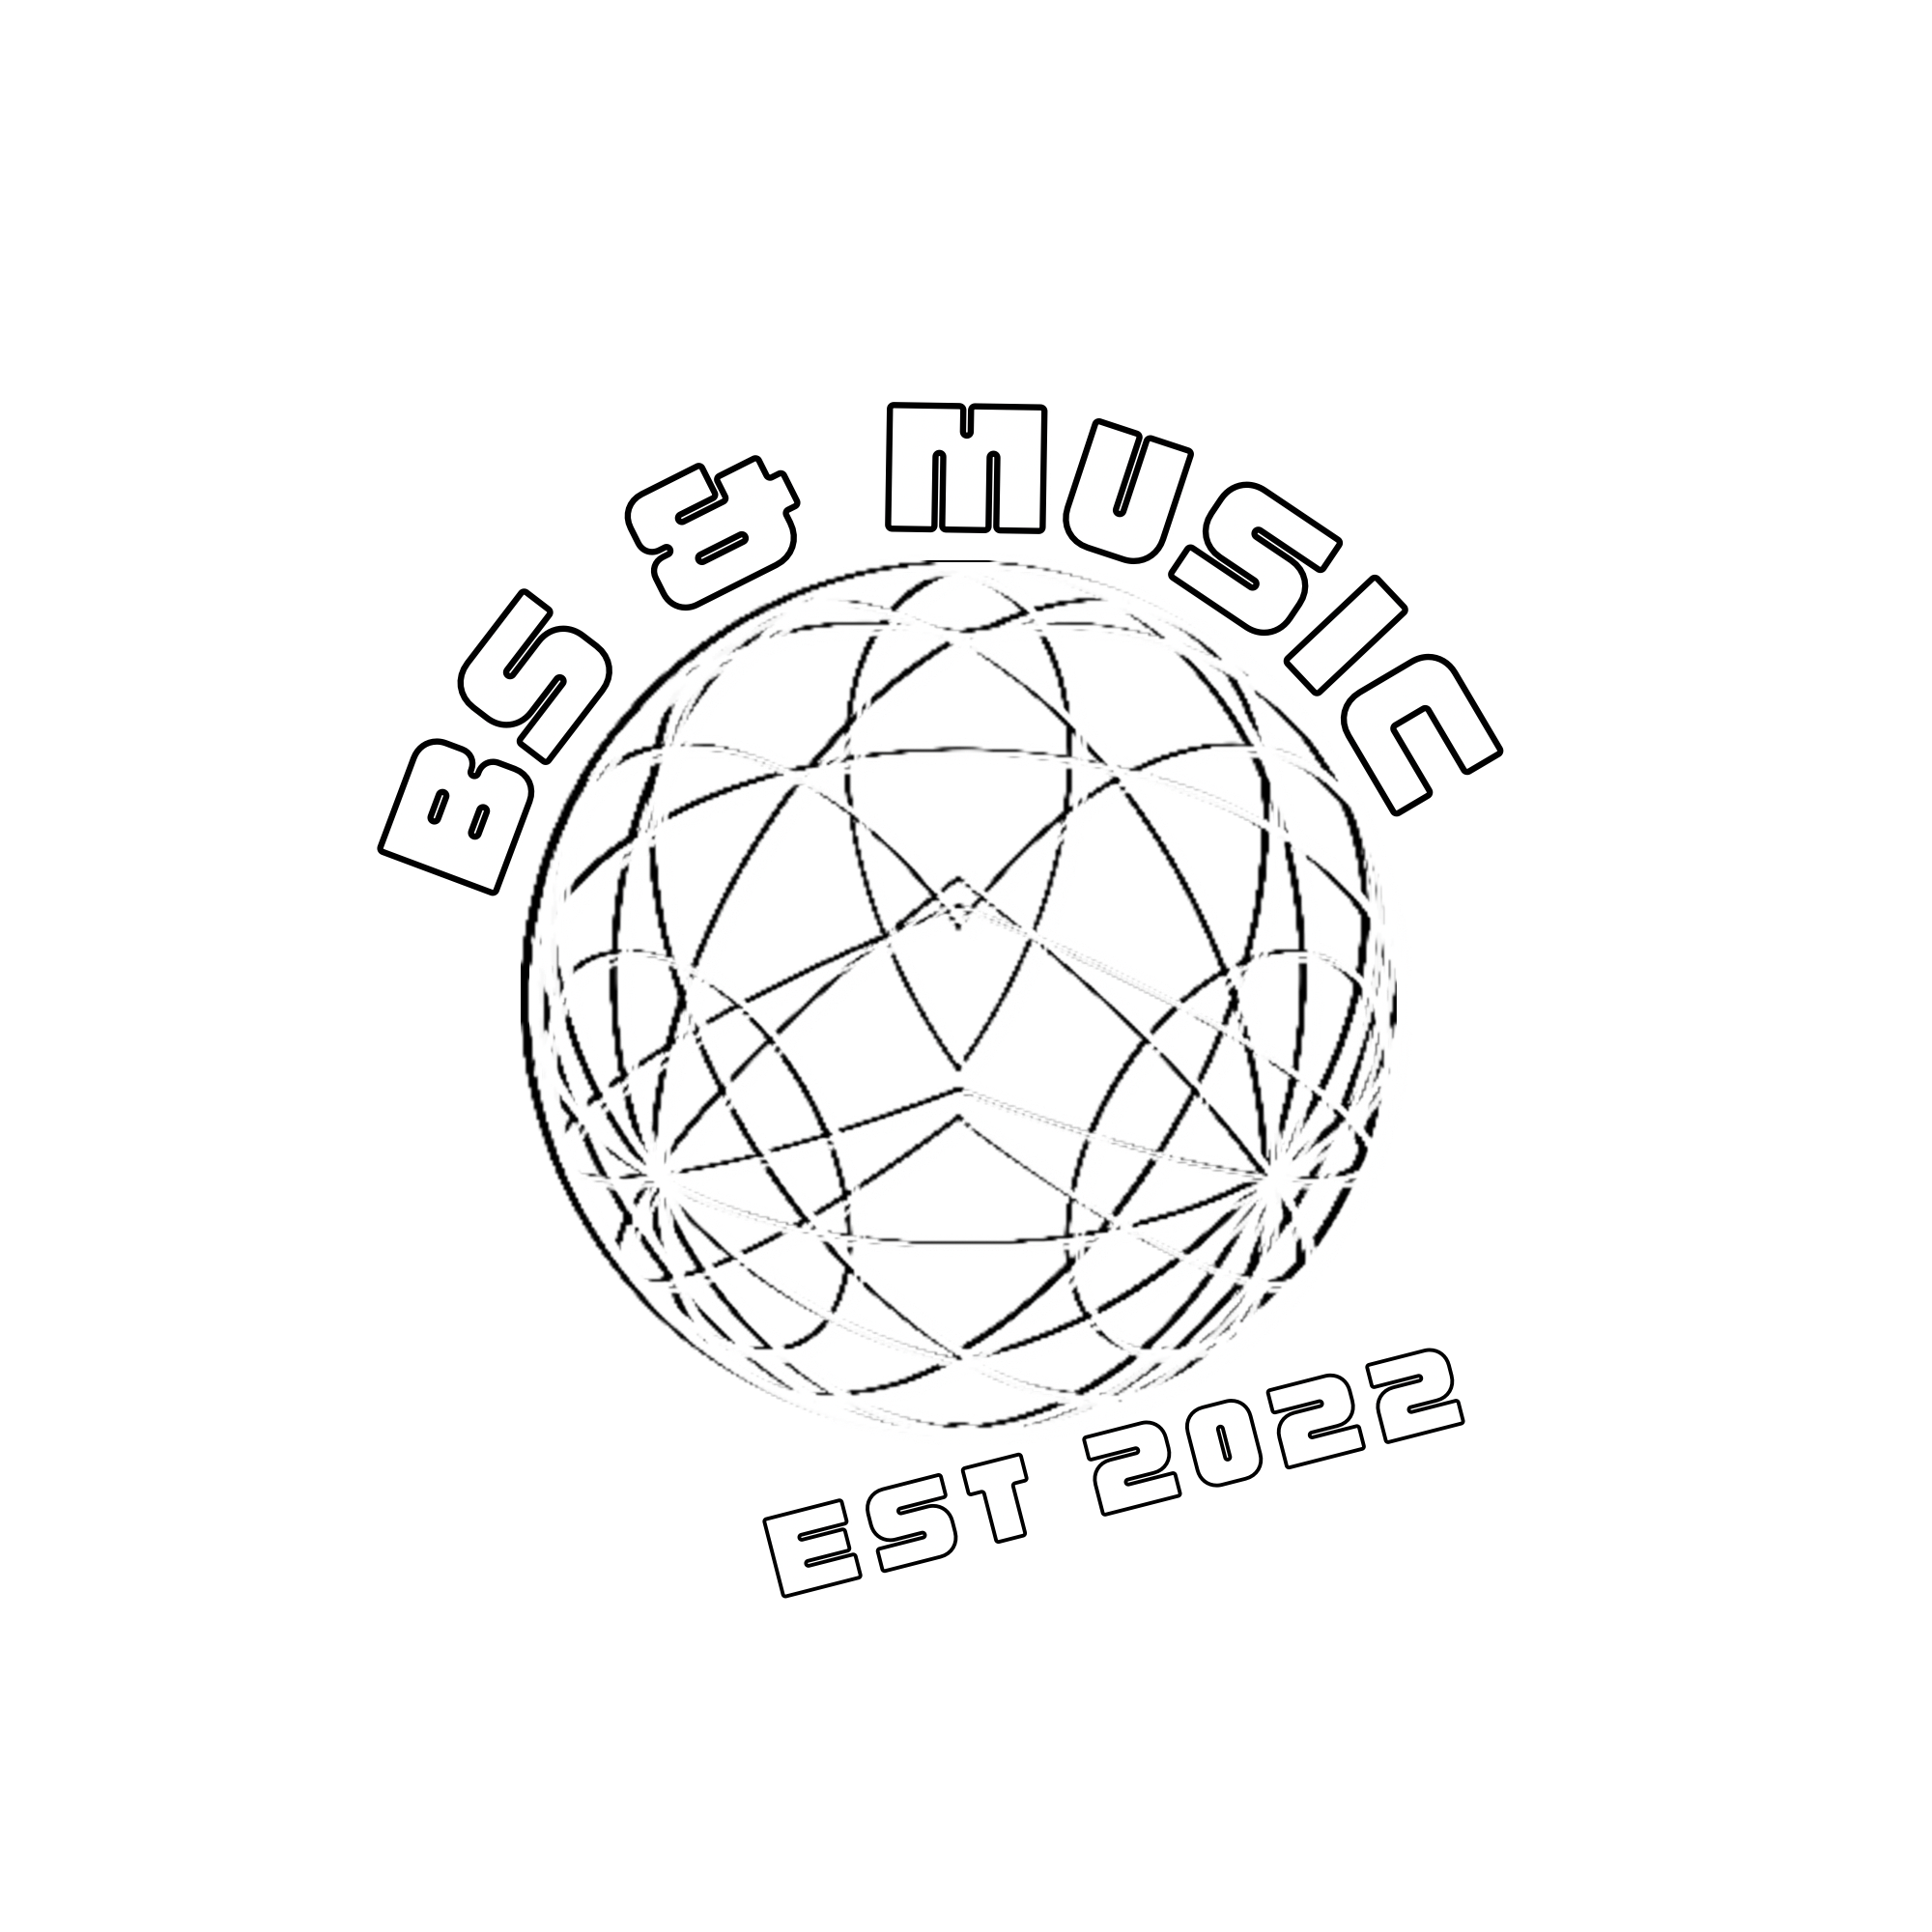 BS & MUSIC